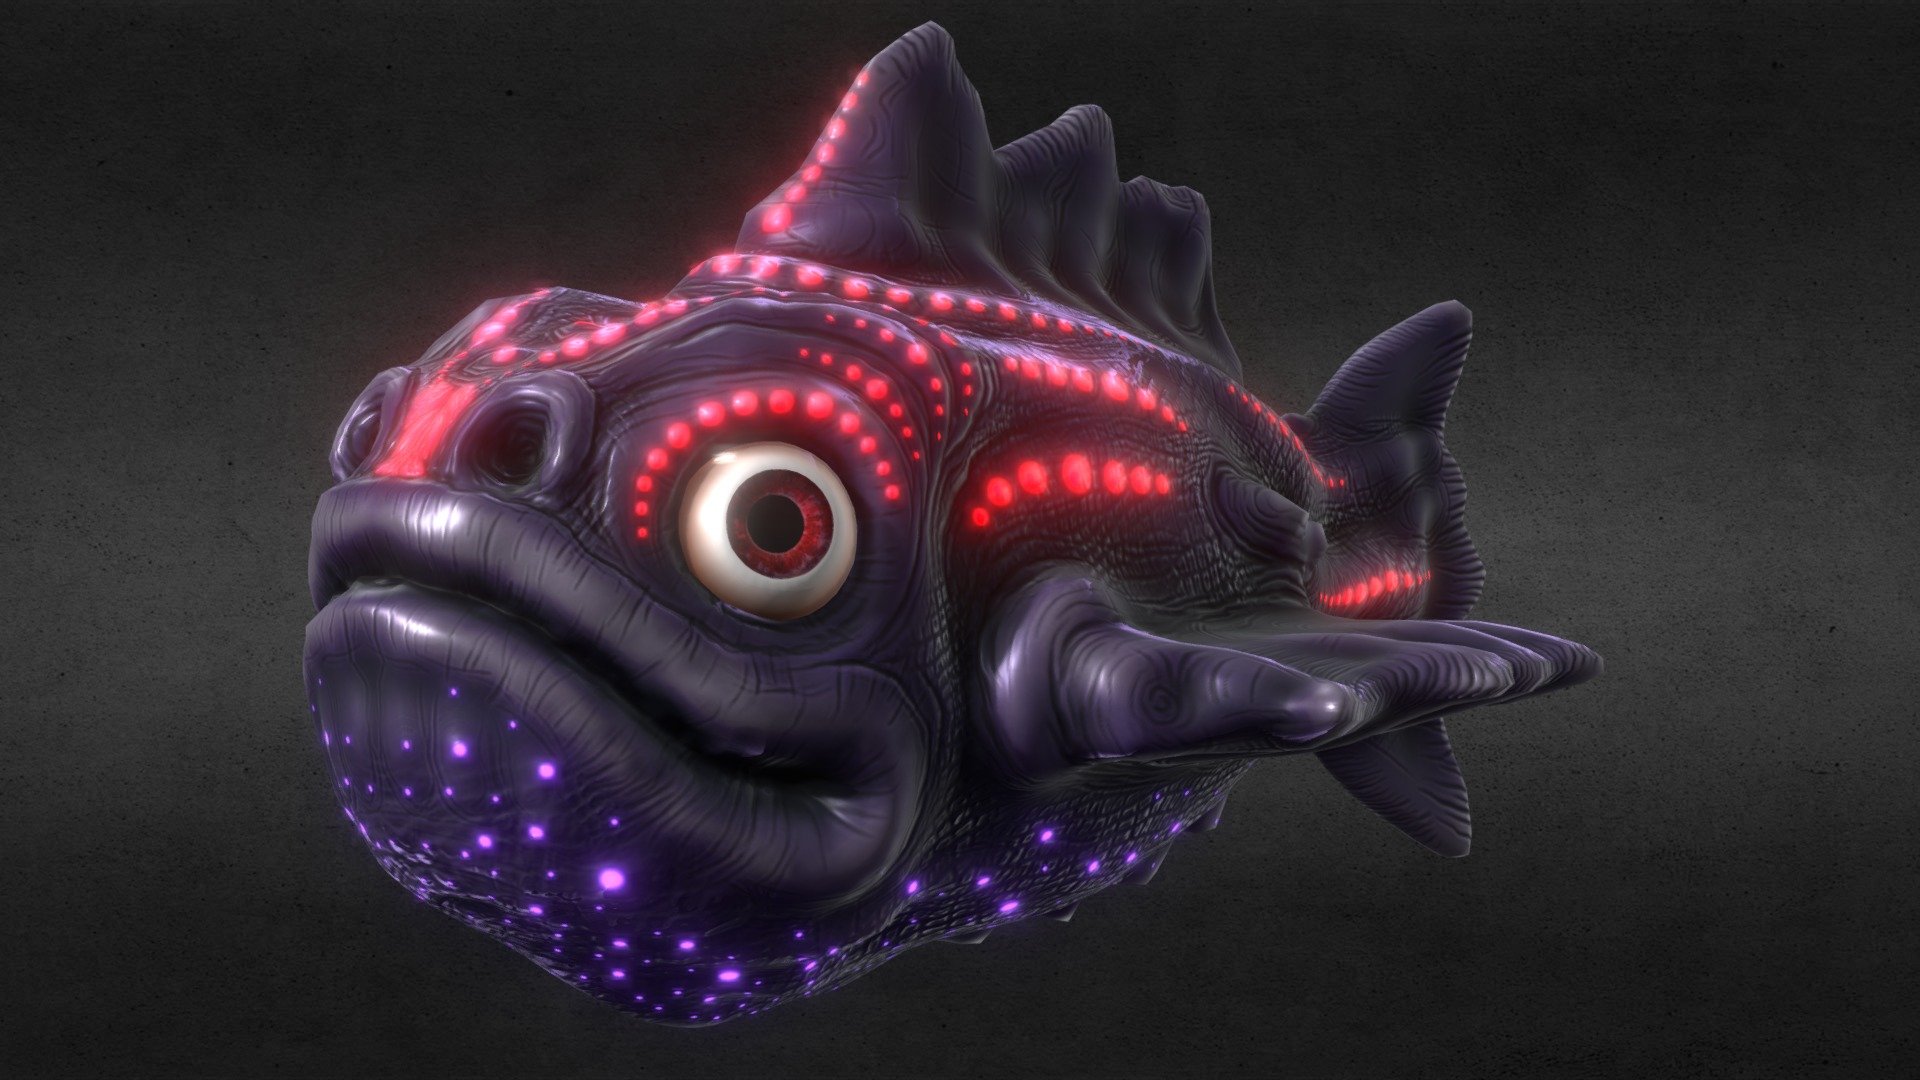 Fantasy monster fish (original concept) - Buy Royalty Free 3D